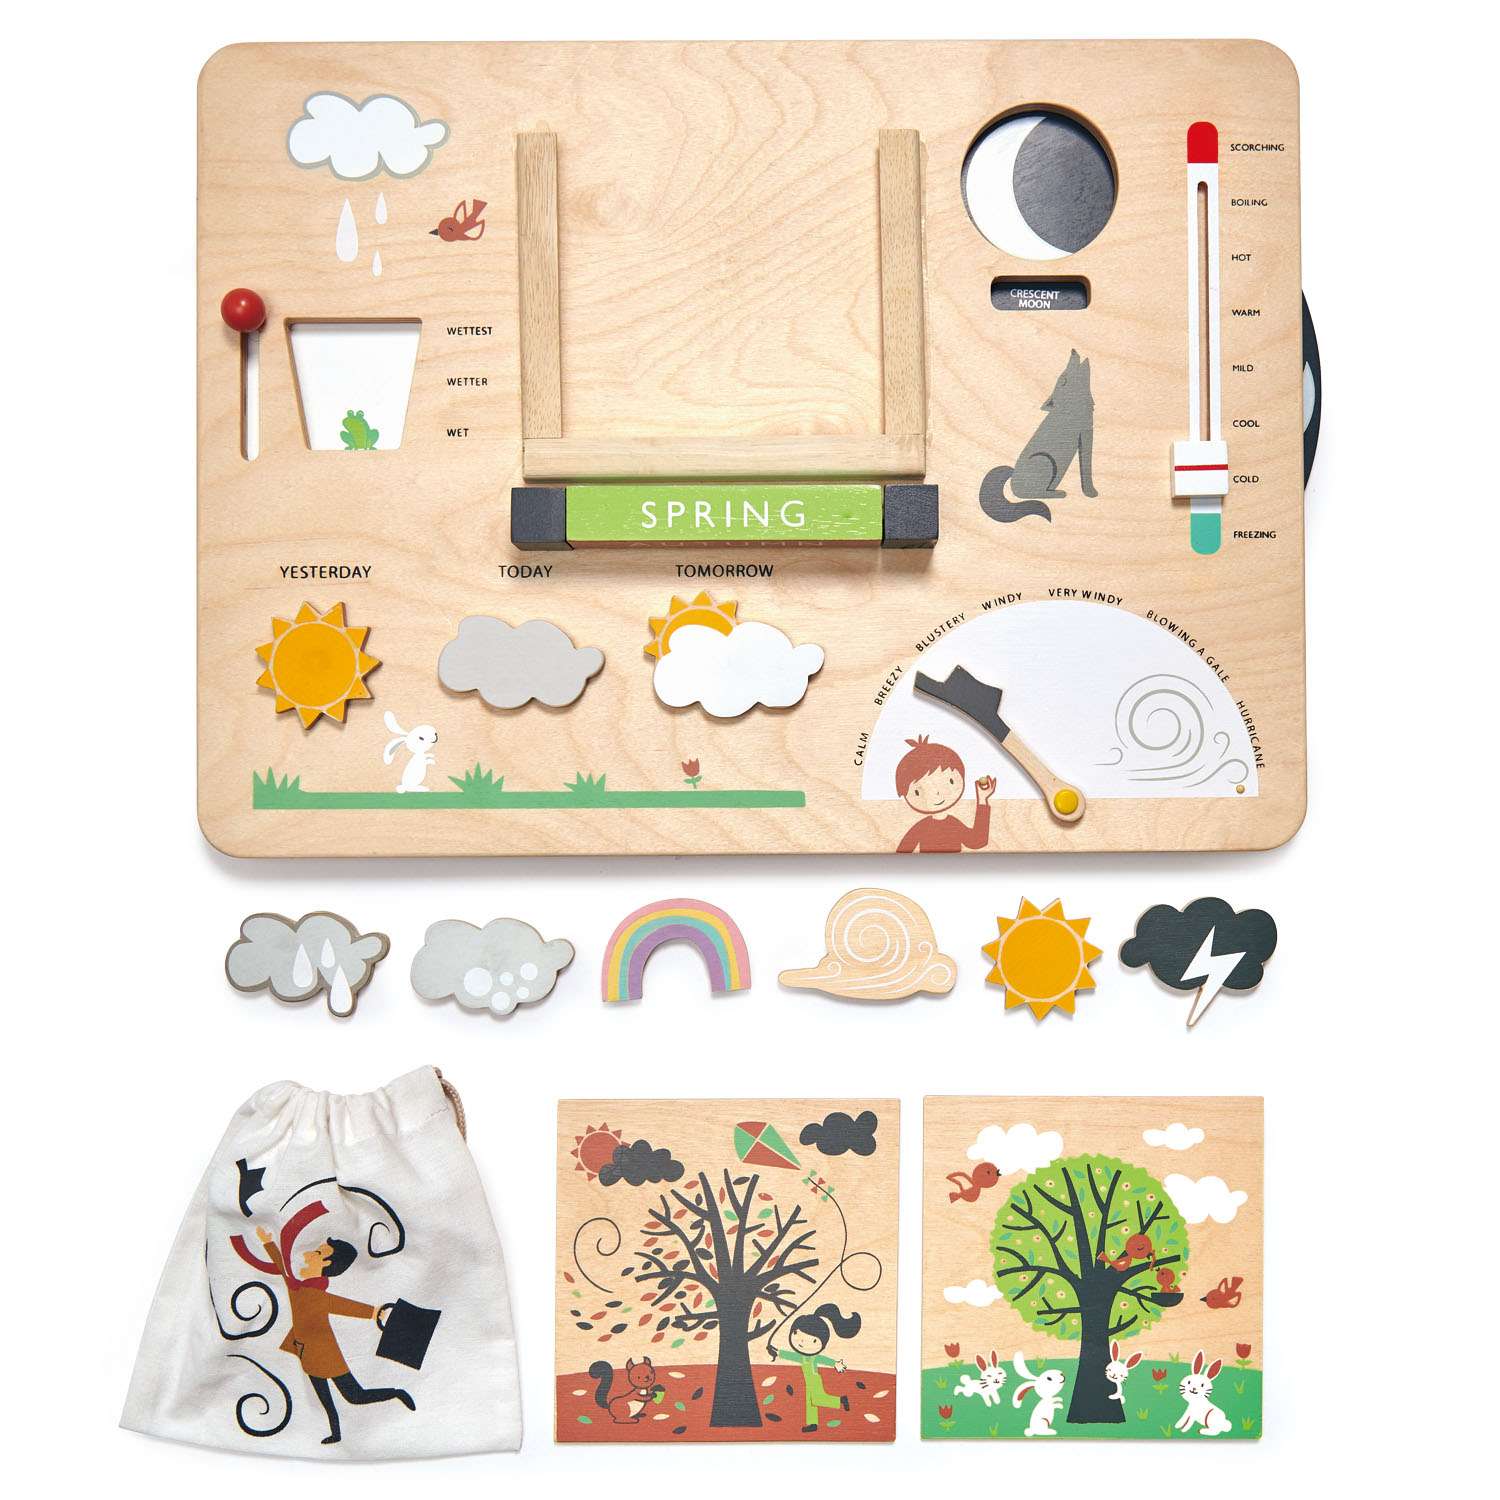 Tender Leaf Toys ของเล่นไม้ ของเล่นเสริมพัฒนาการ เครื่องวัดอุณหภูมิ Weather Watch